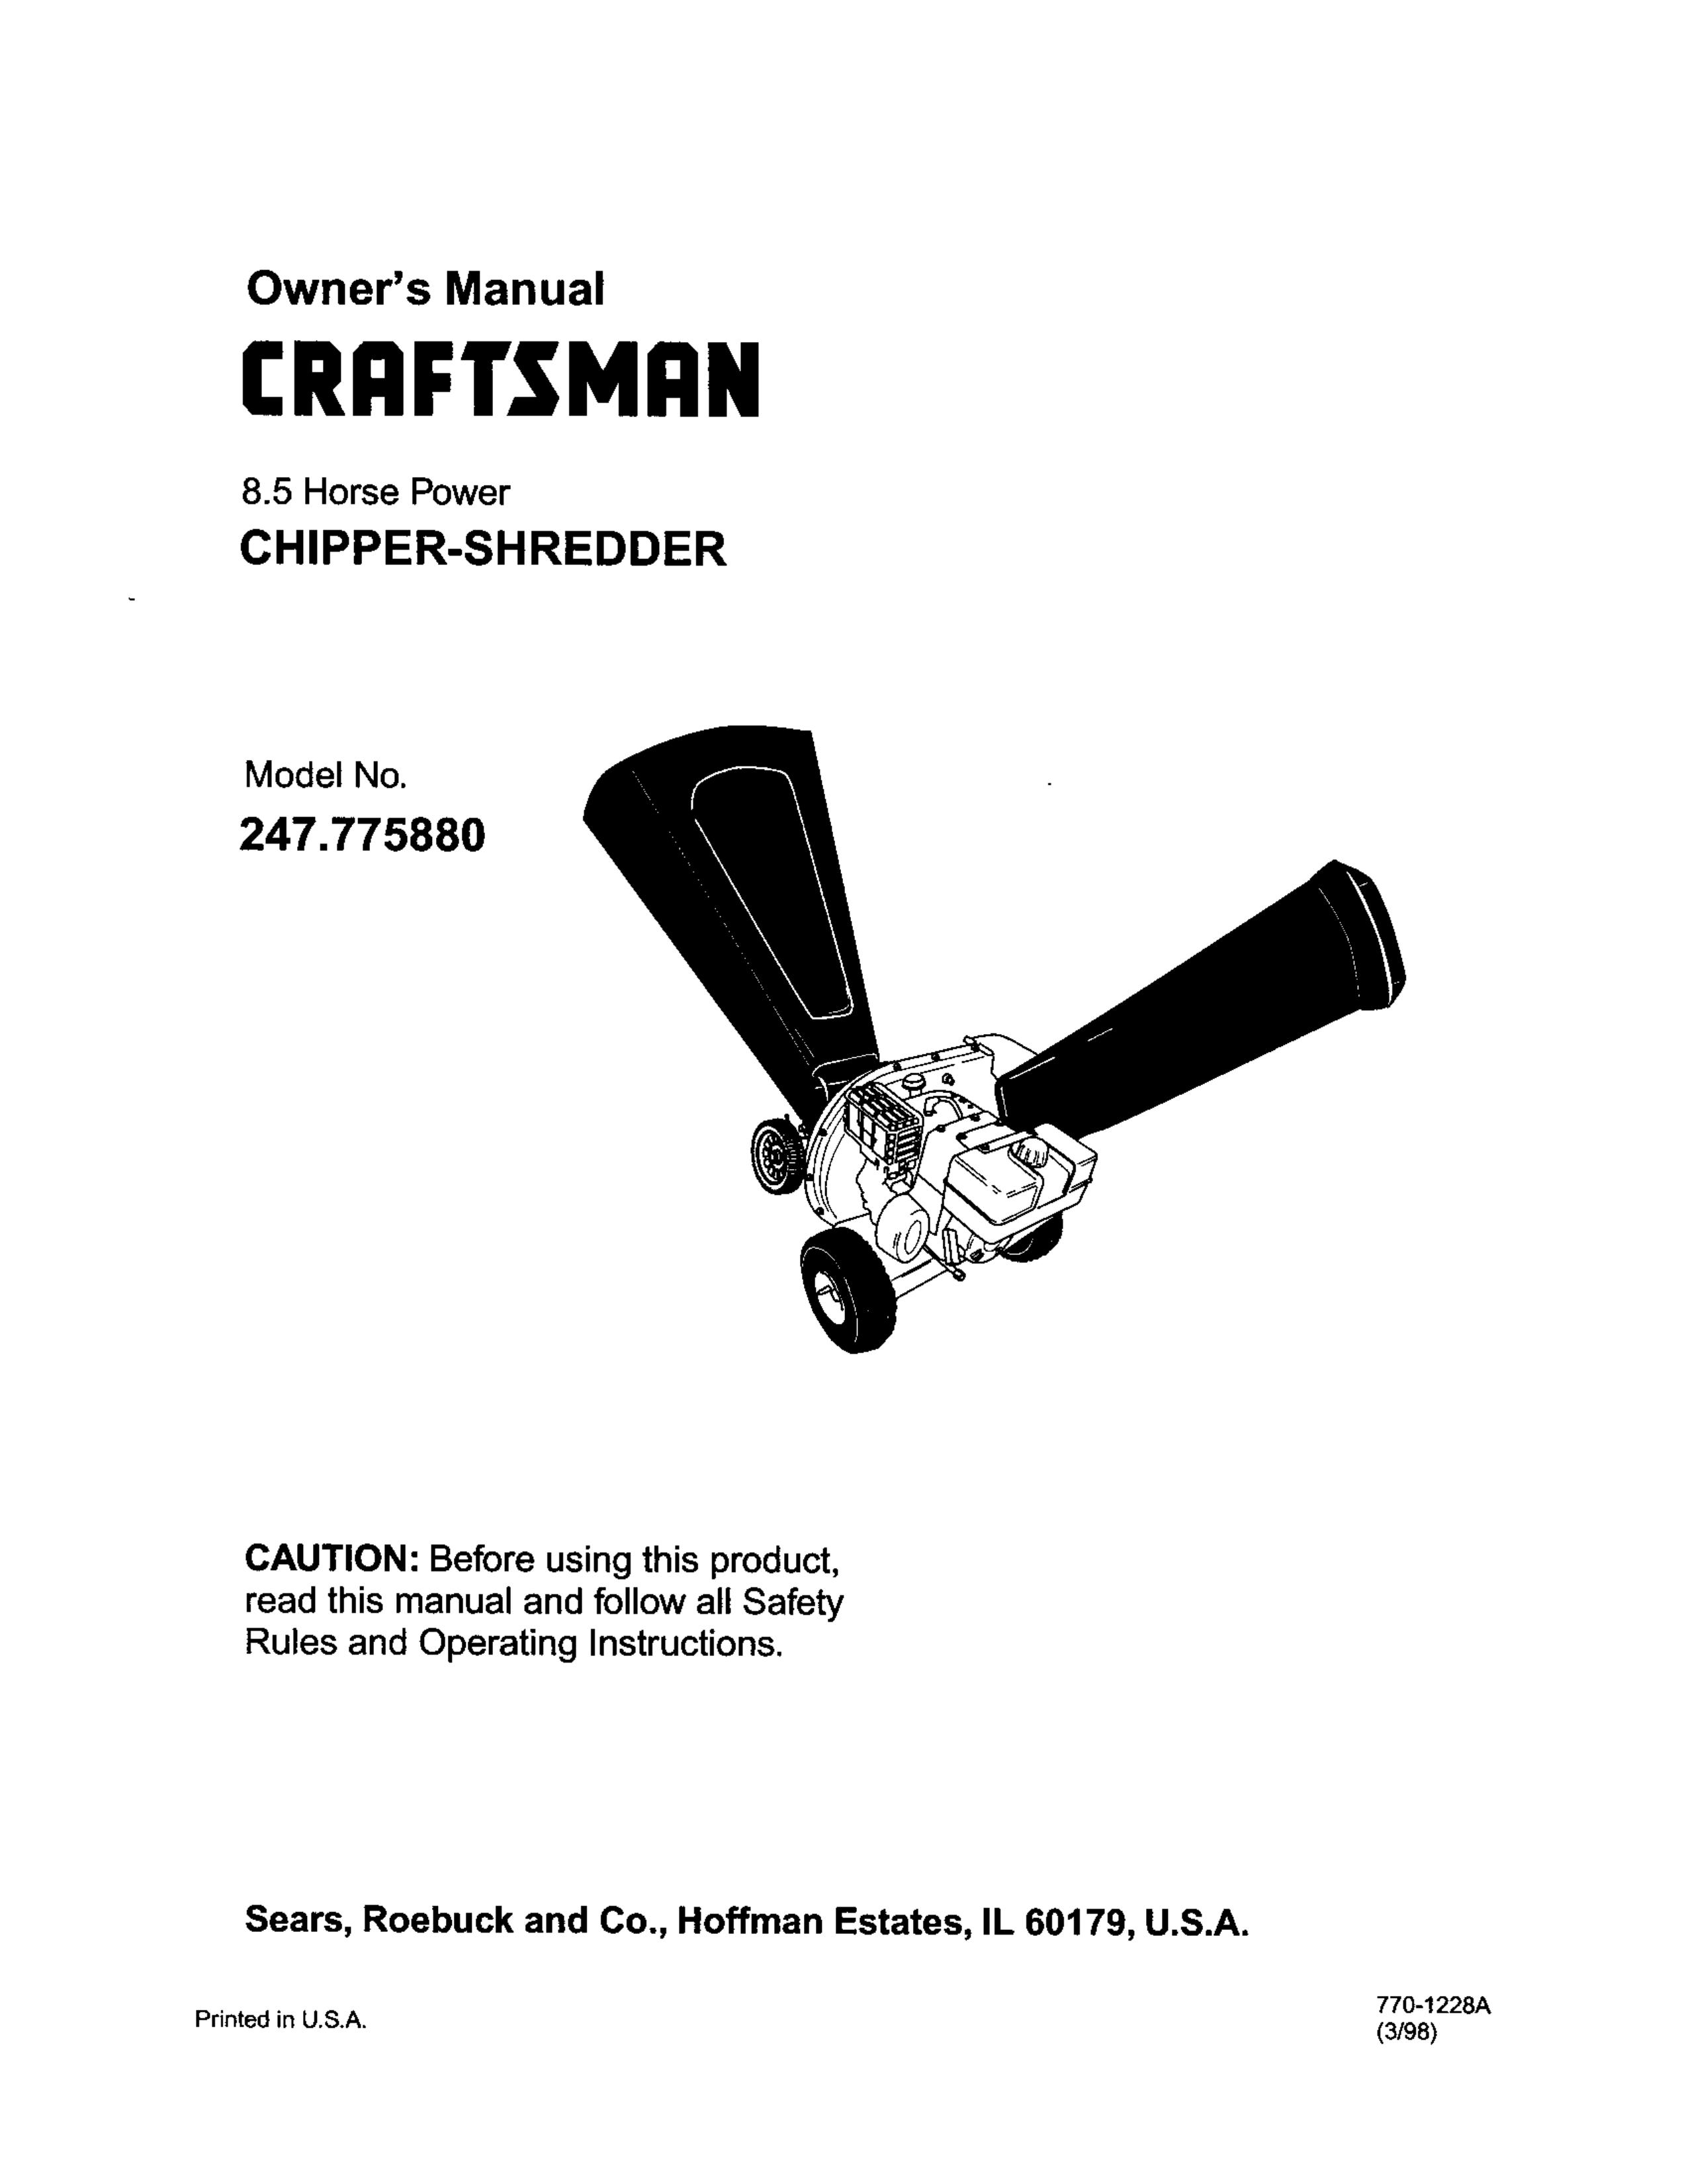 Craftsman 247.77588O Chipper User Manual